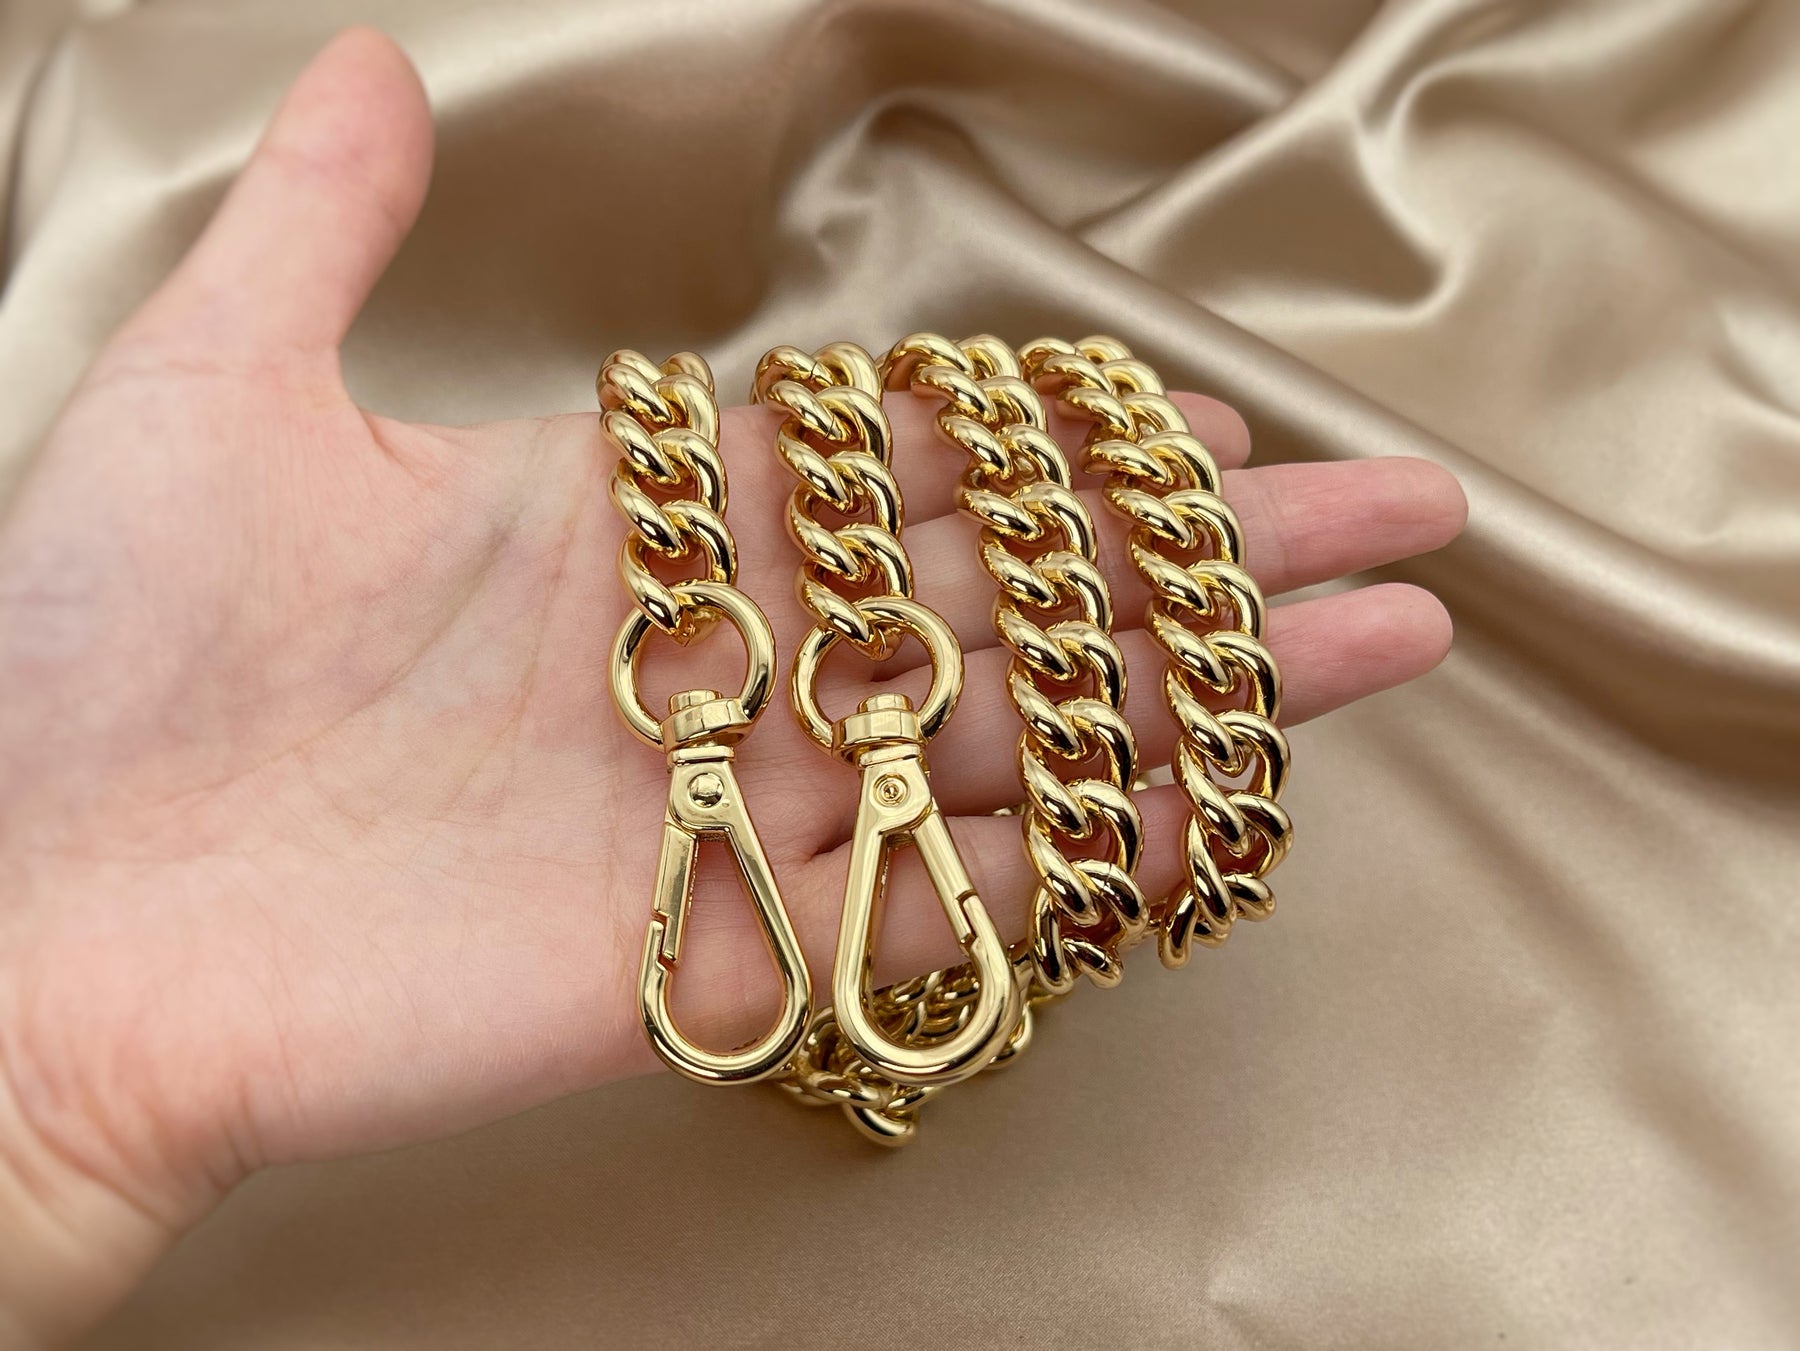 Gold Shoulder Flat Chain Strap Replacement for Louis Vuitton Pochette